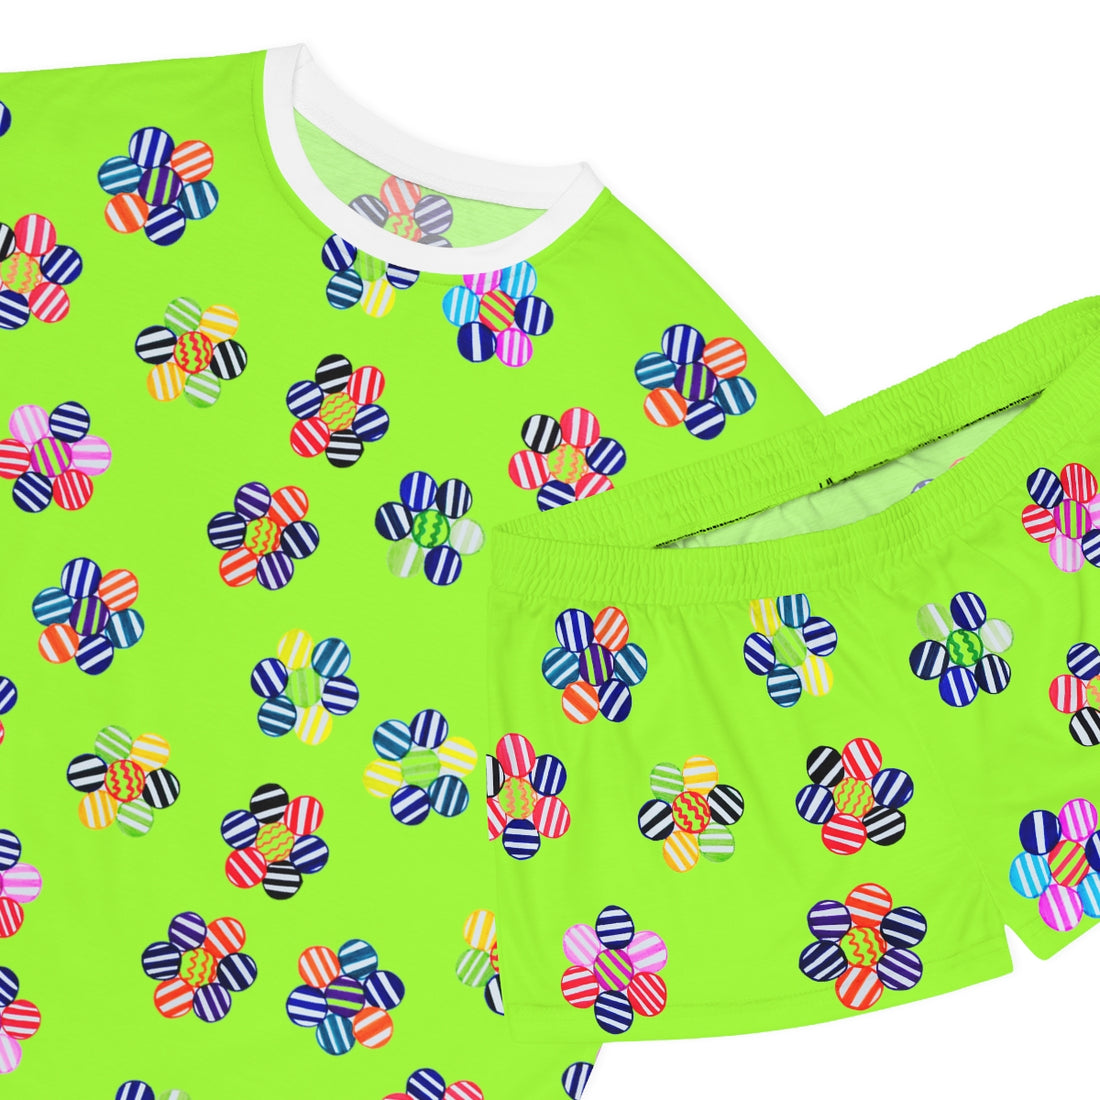 lime green geometric floral shorts & t-shirt pajama set